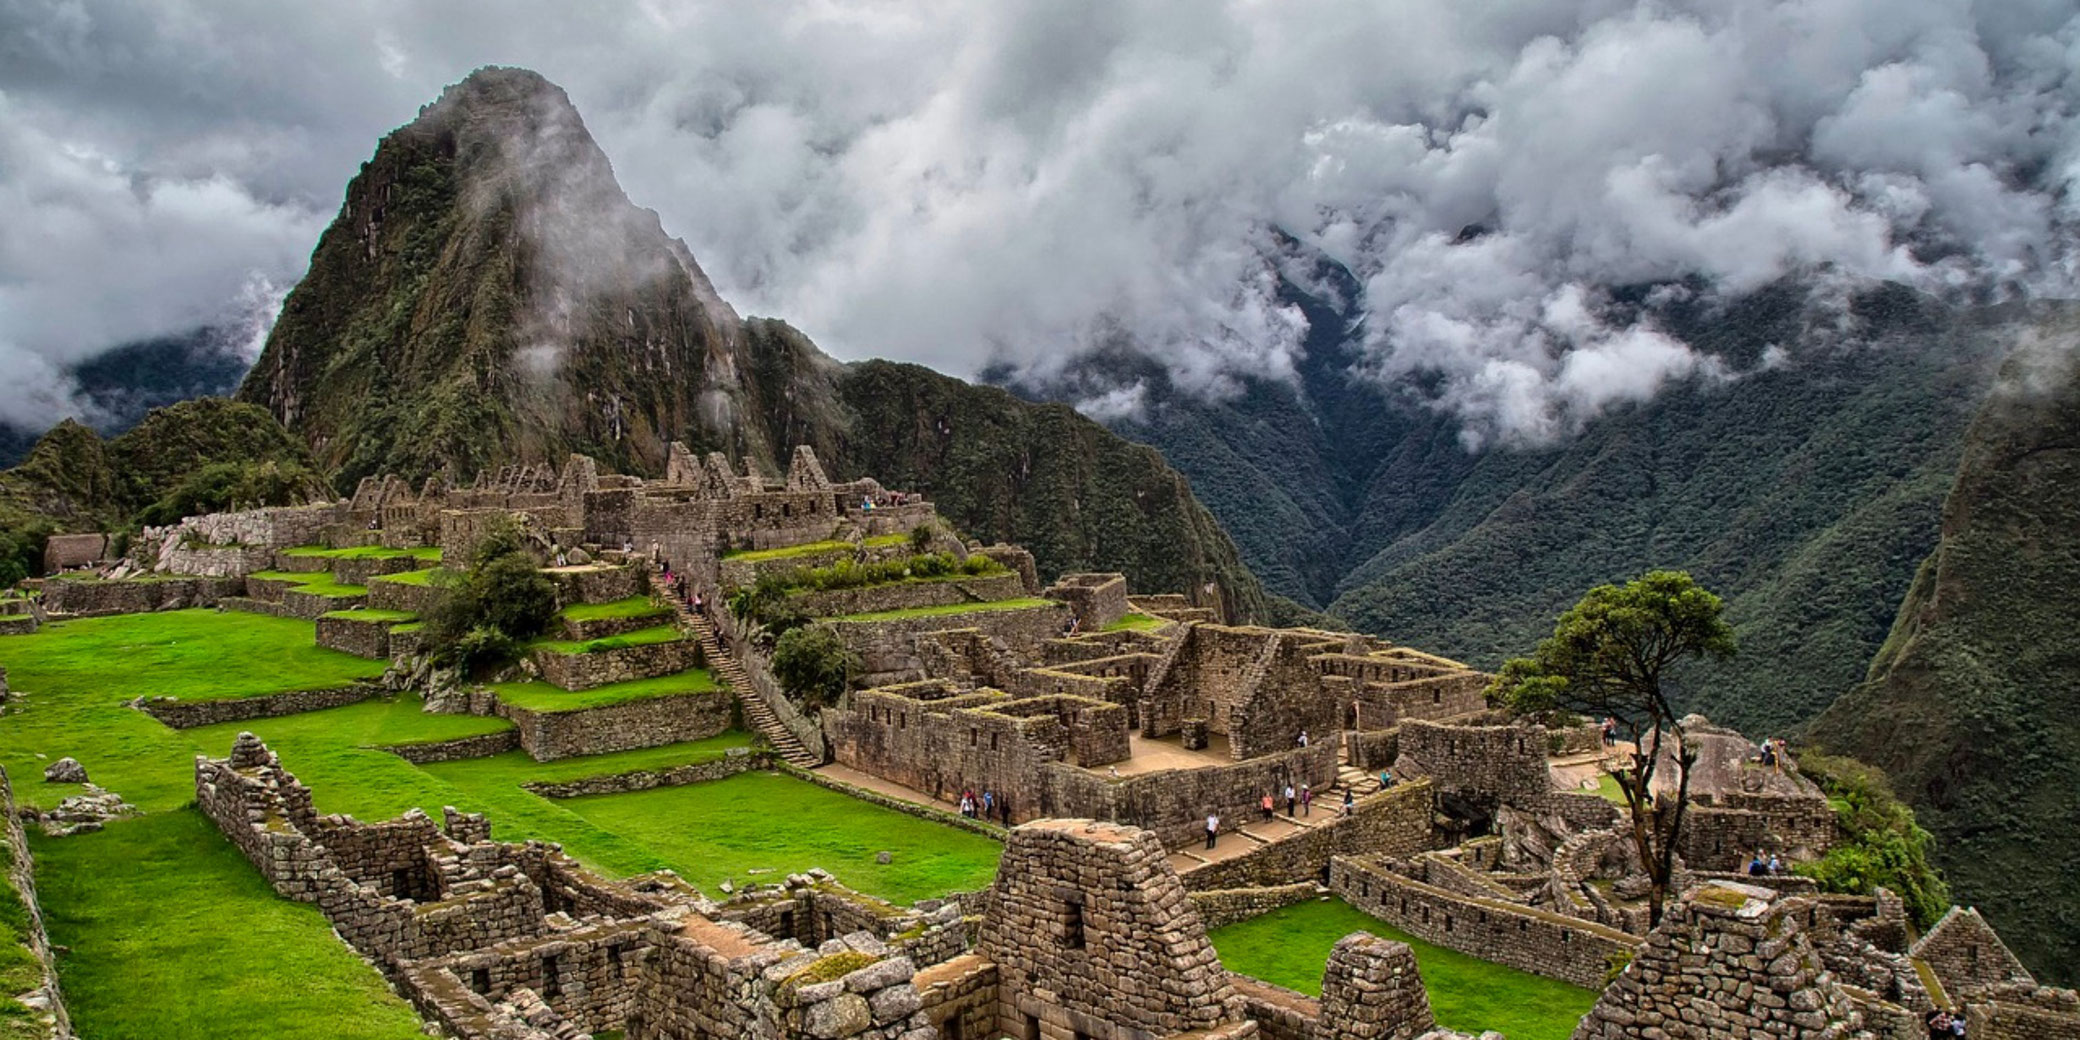 Machu Picchu: The astonishing genius of Incan architecture, engineering, and spirituality